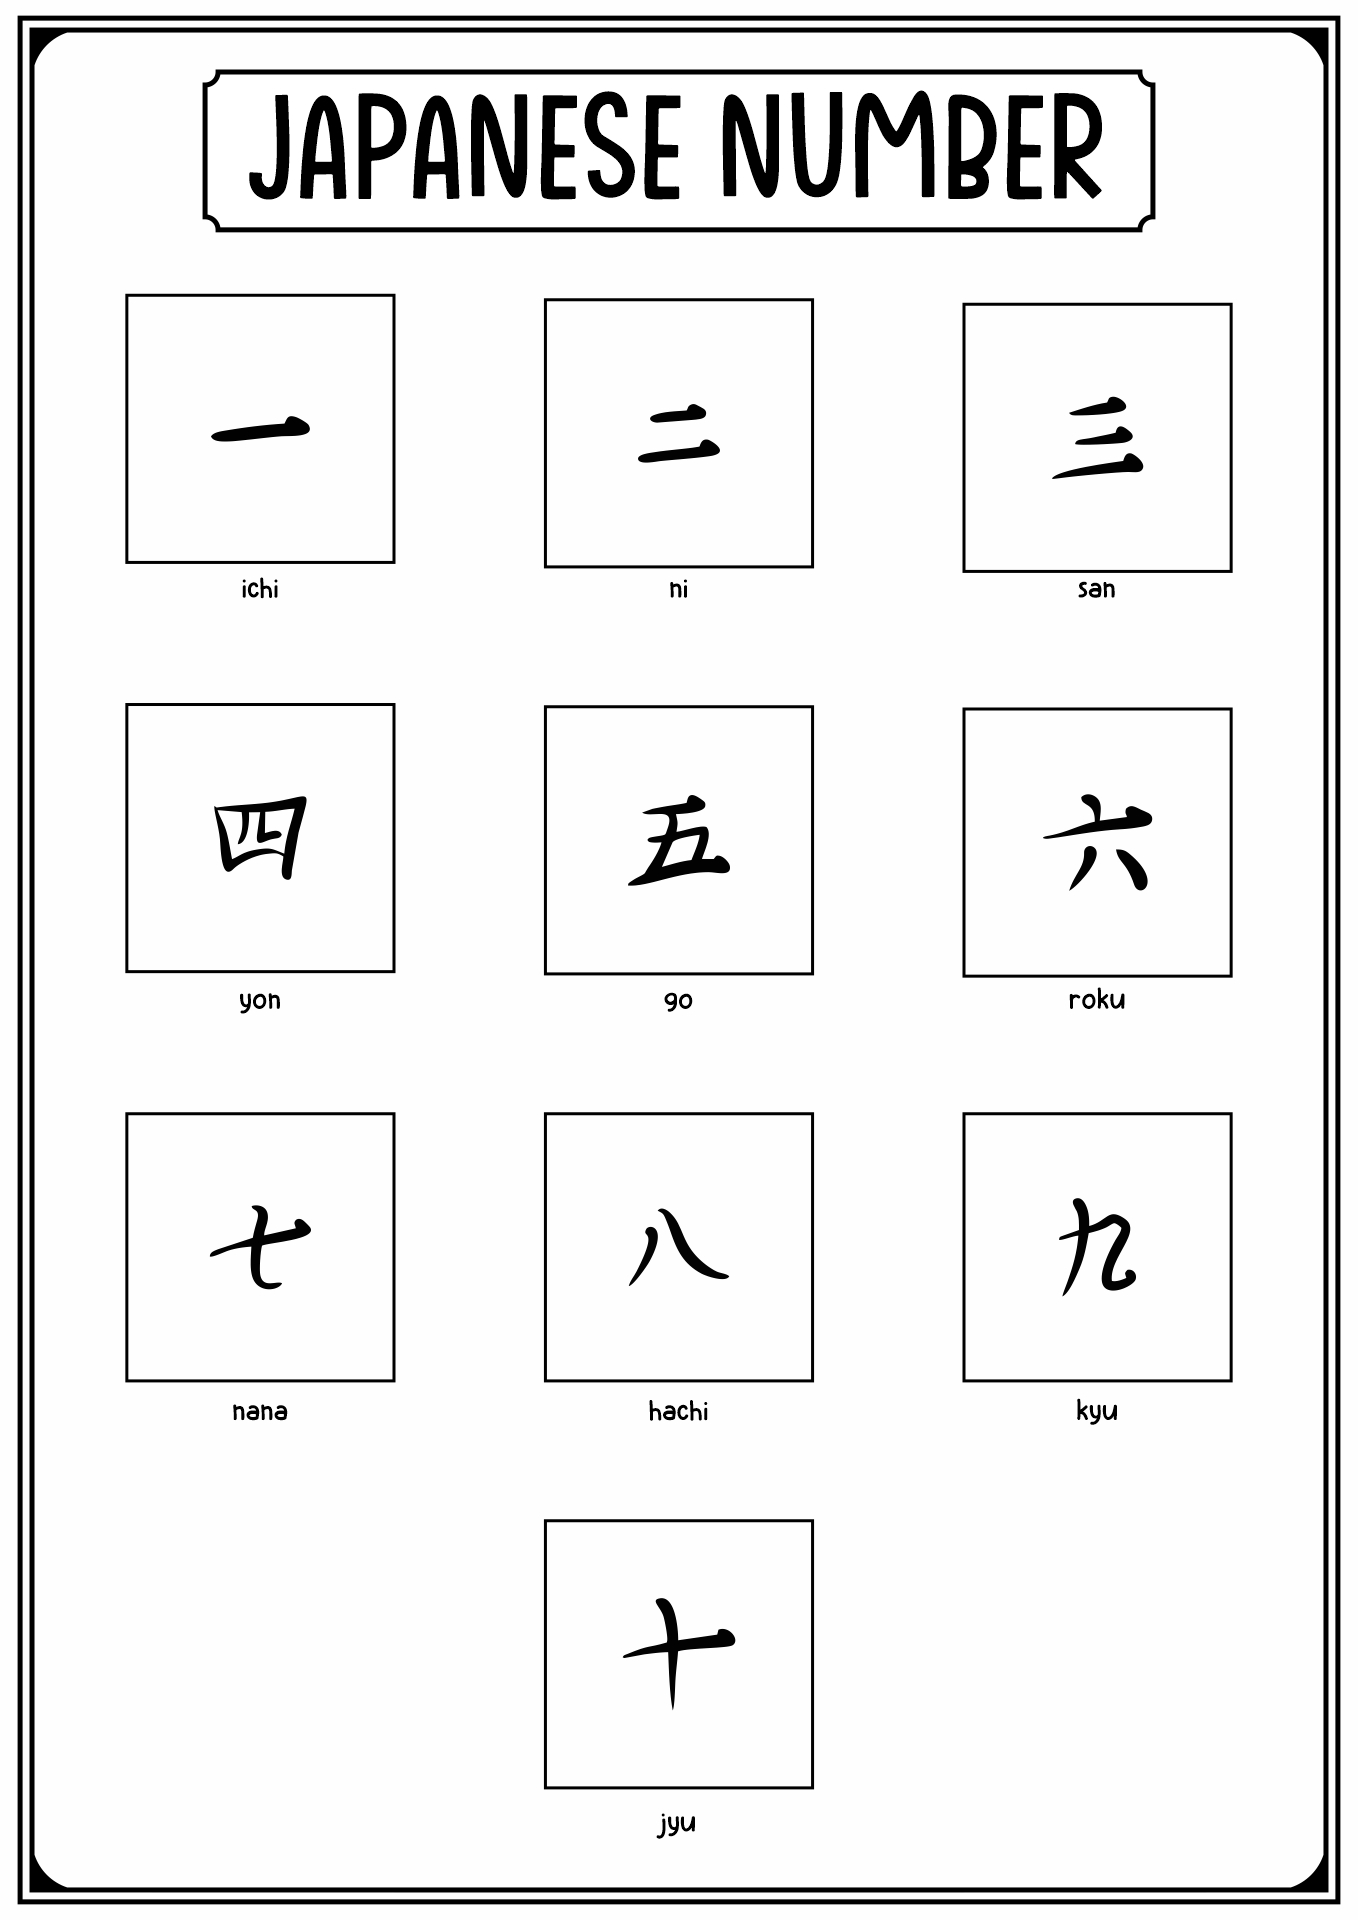 Japanese Number Symbols